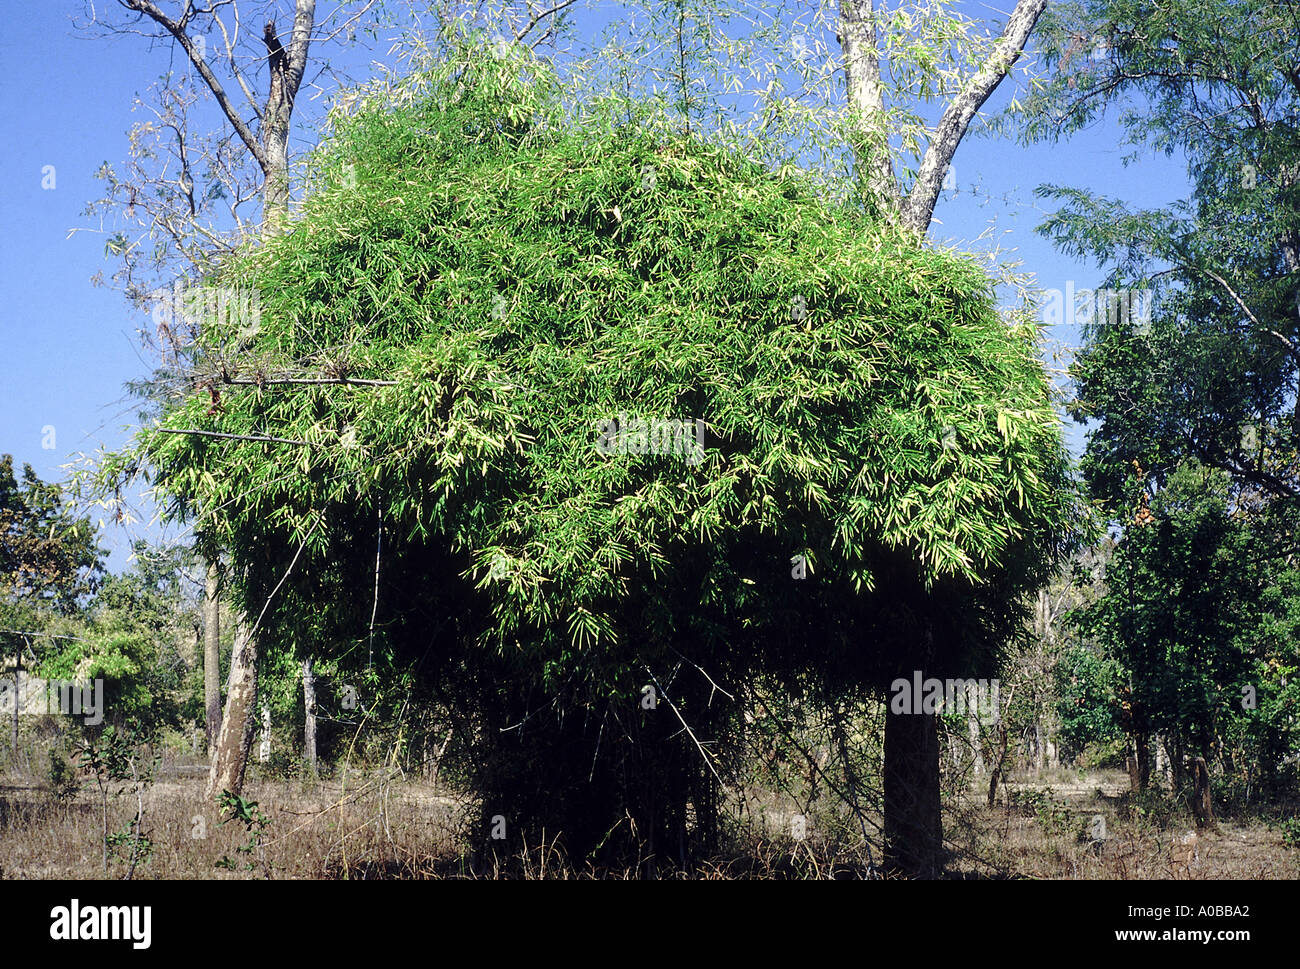 Dendrocalamus Strictus Family Poaceae A bamboo clump with a peculiar mushroom like shape Stock Photo